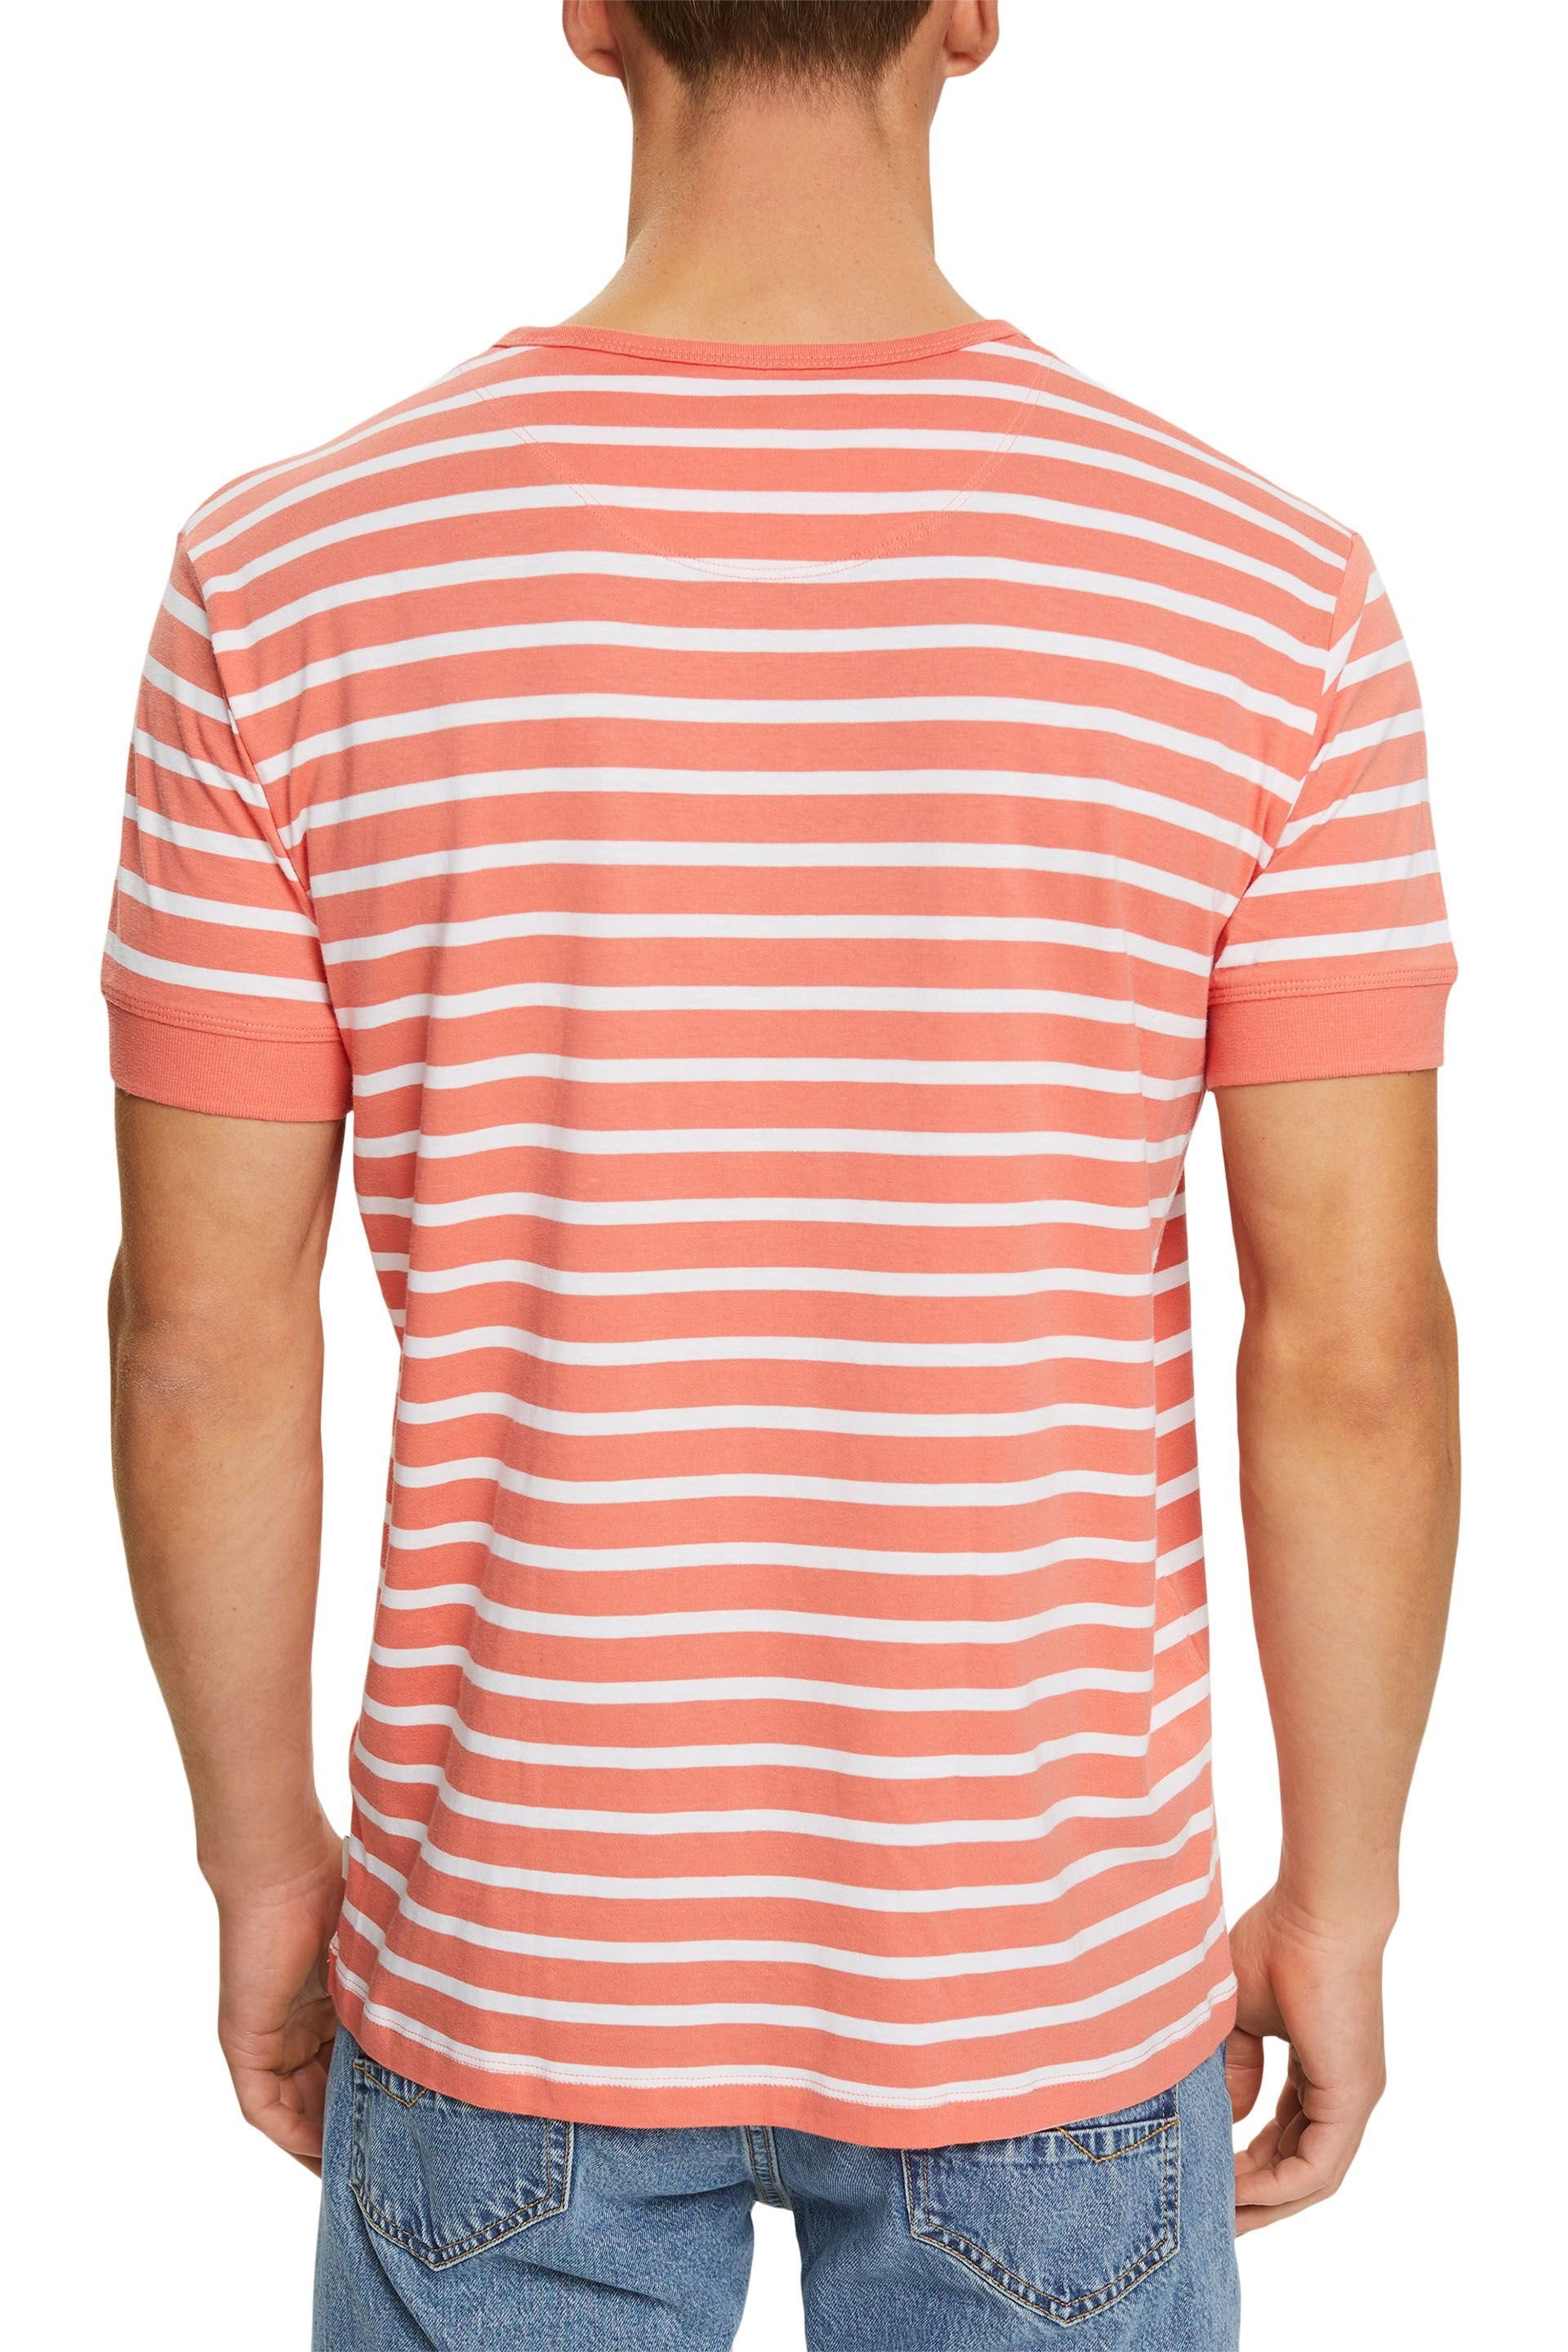 T-Shirt coral Esprit